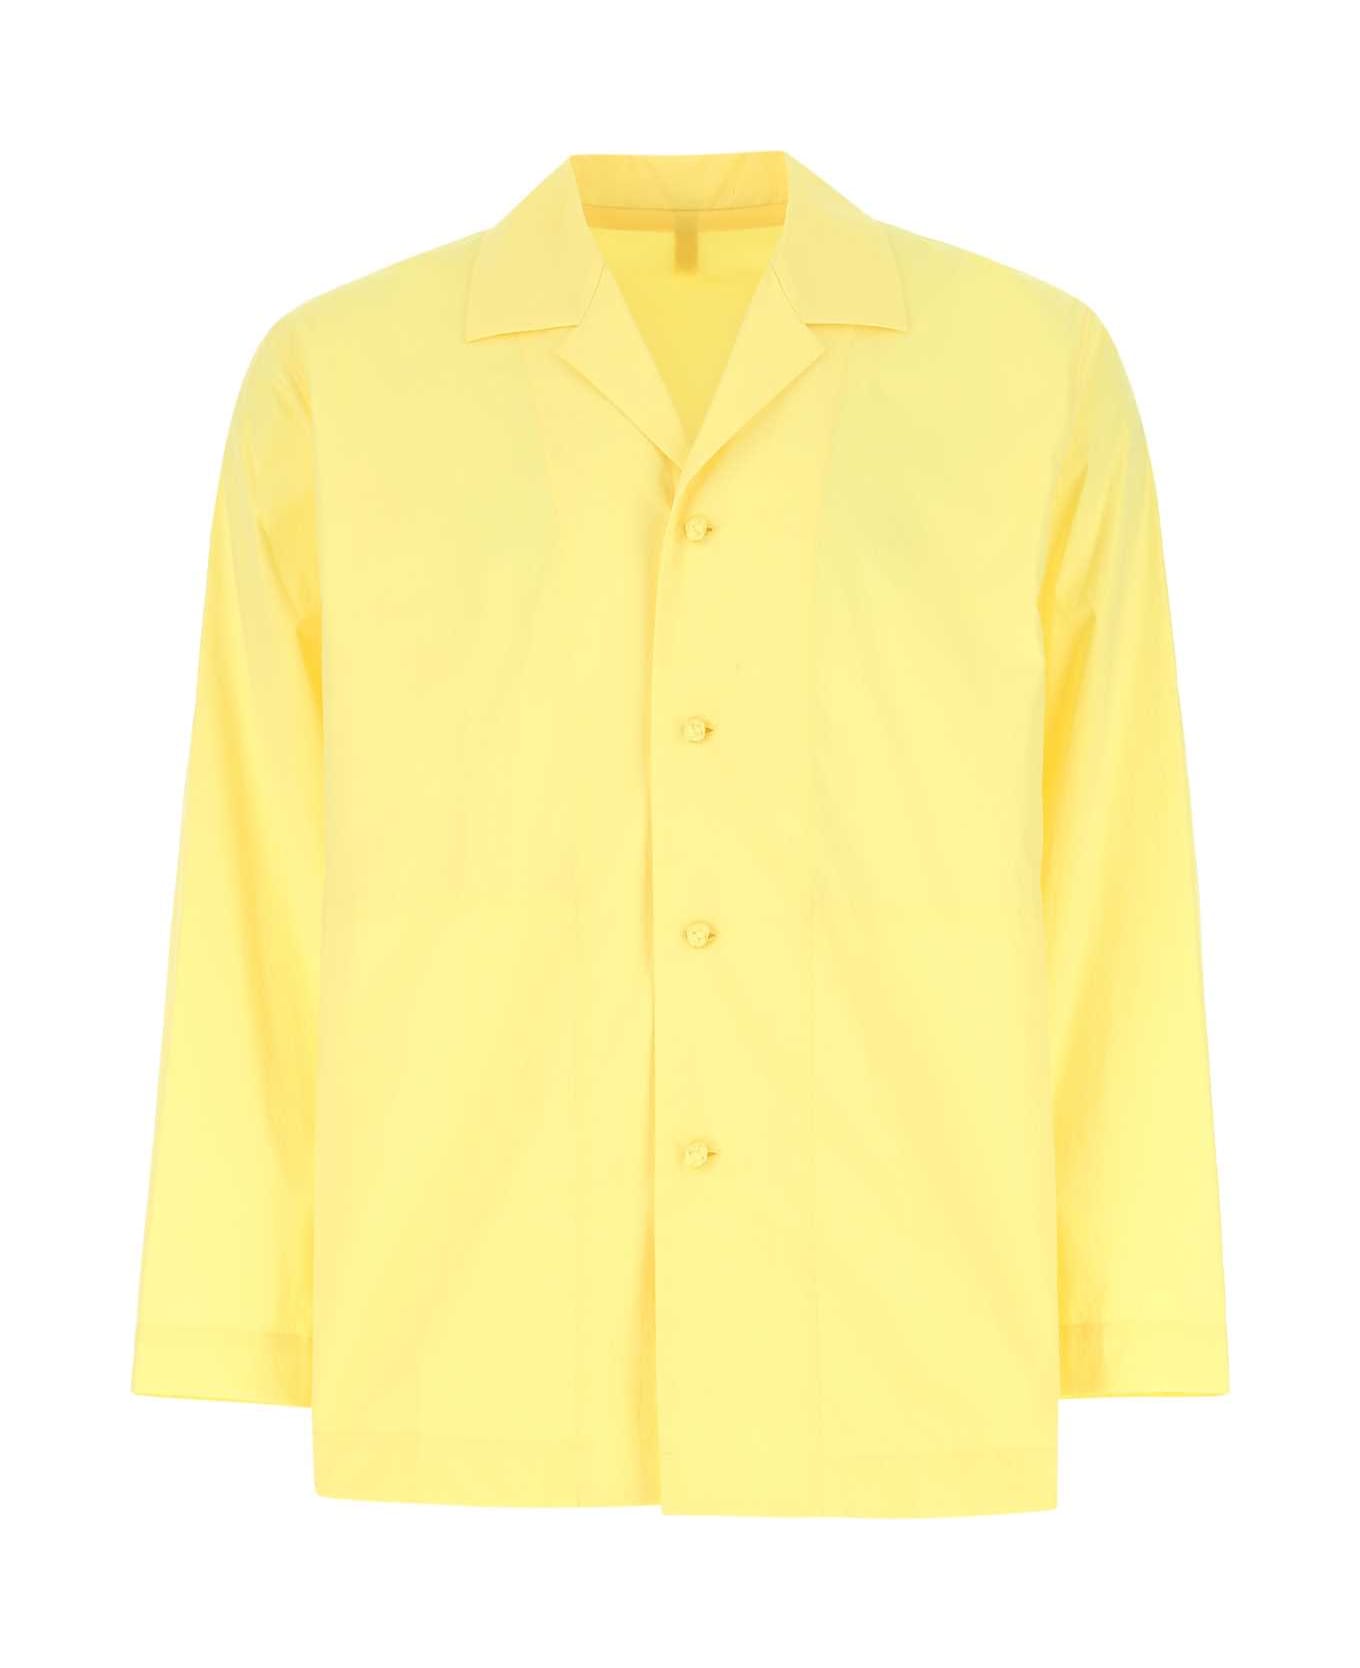 Homme Plissé Issey Miyake Yellow Polyester Shirt - 52